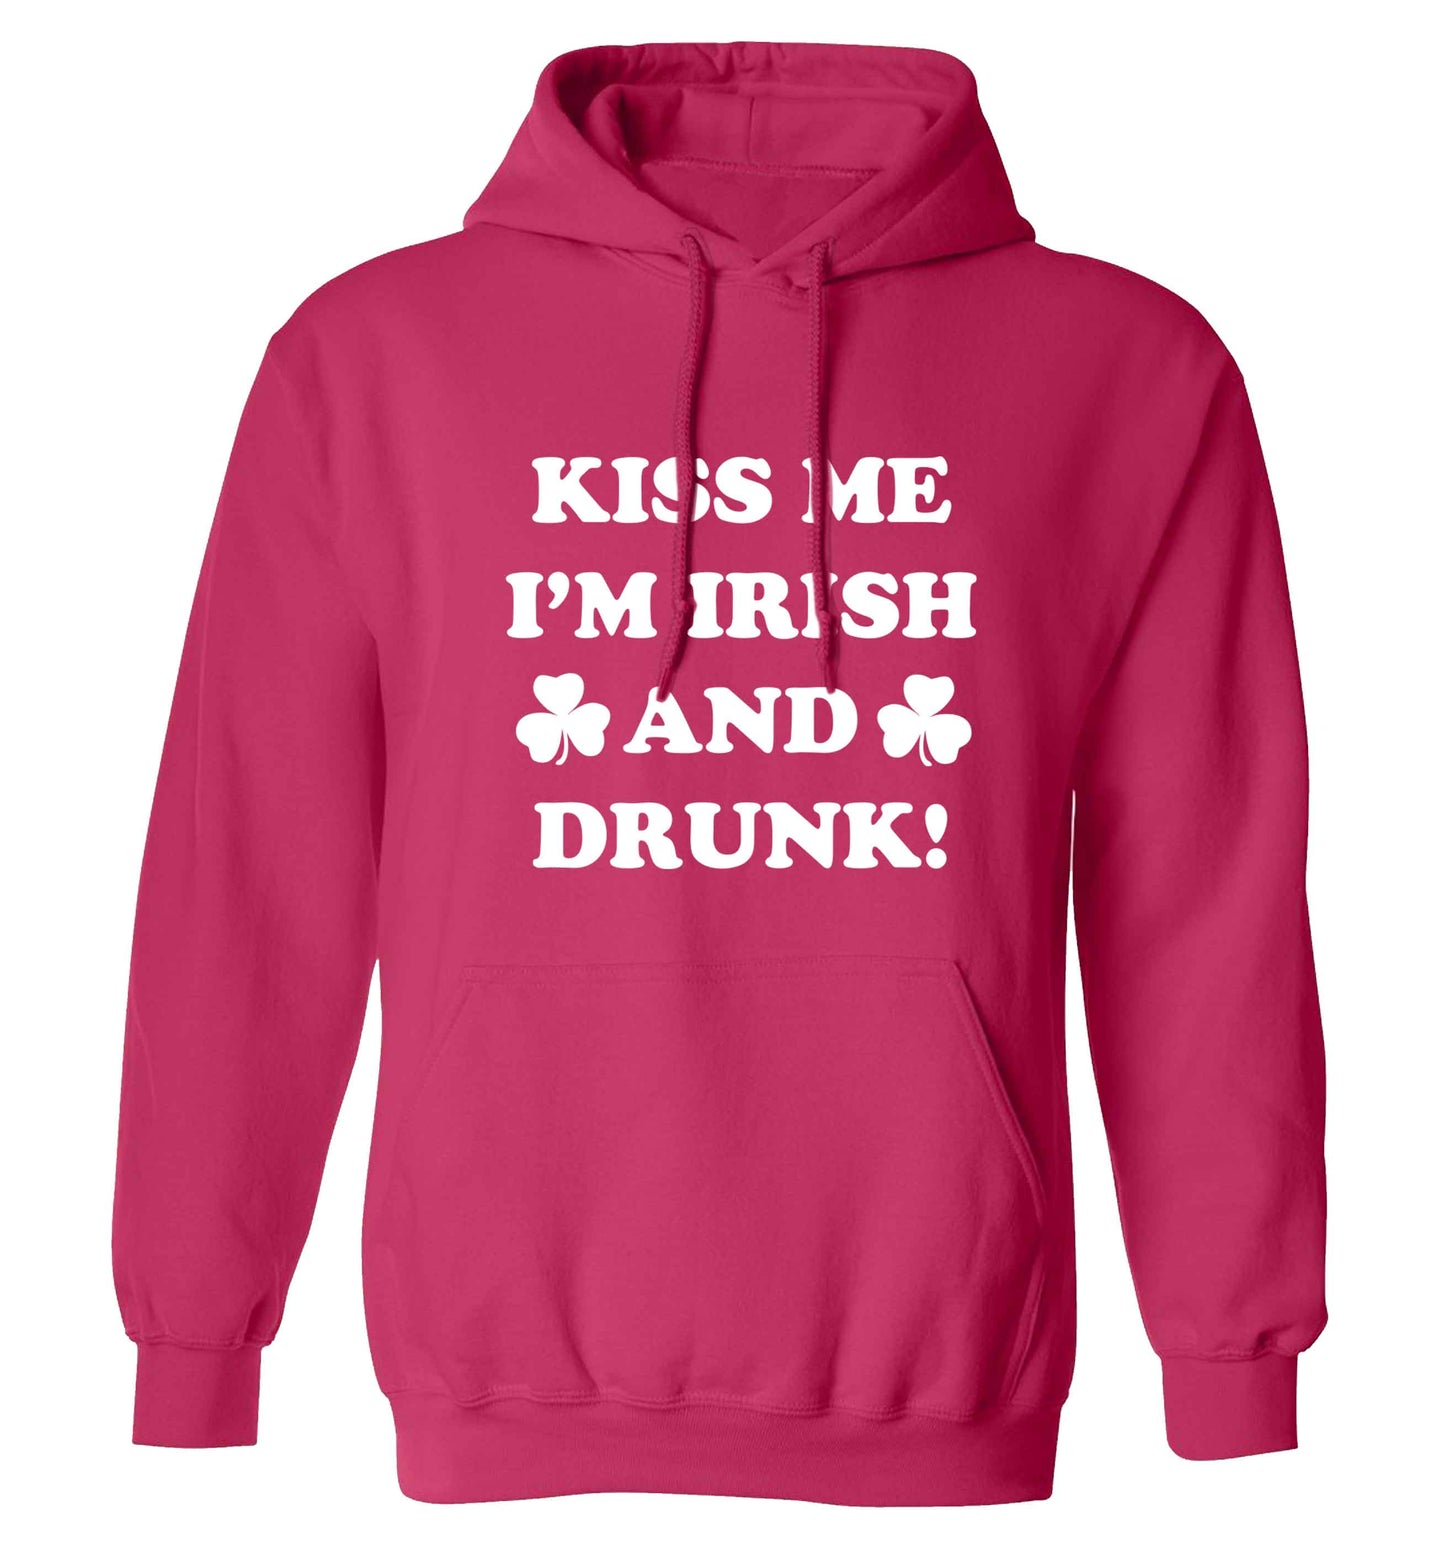 Kiss me I'm Irish and drunk adults unisex pink hoodie 2XL